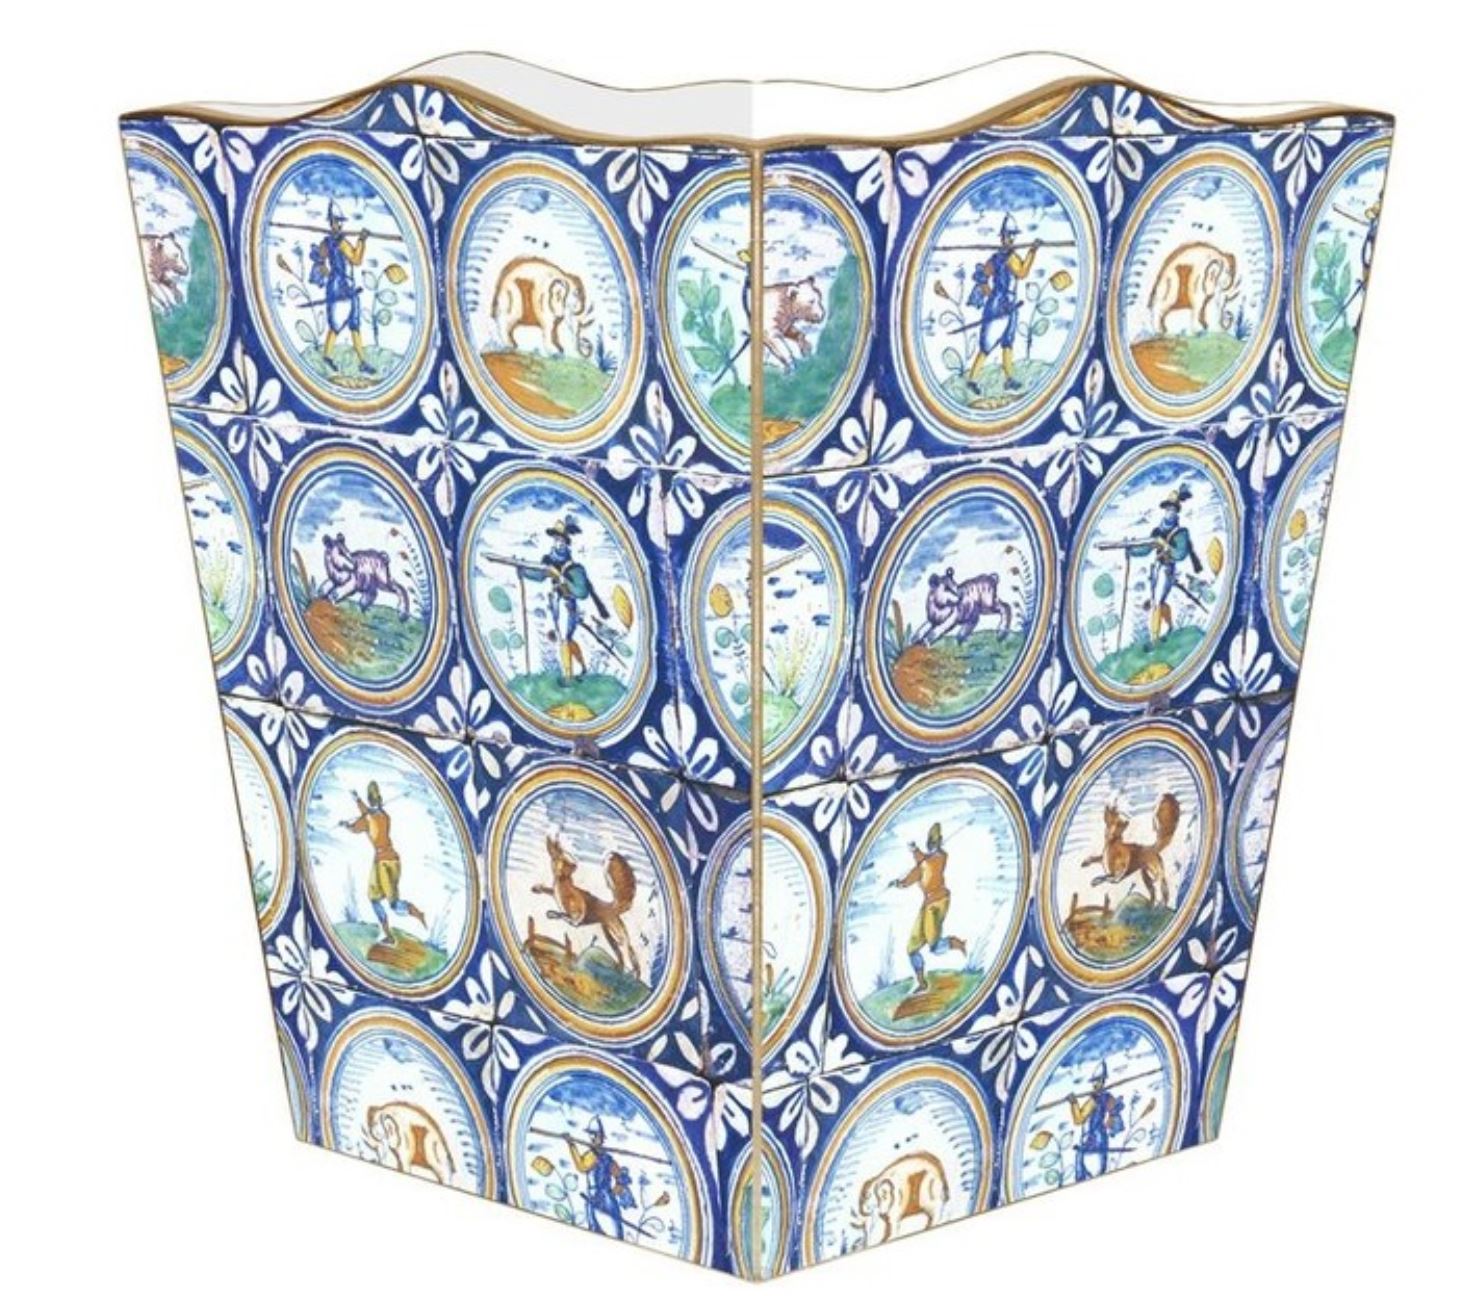 Marye-Kelley, Old European Delft Provencial Tiles Tissue Box Cover